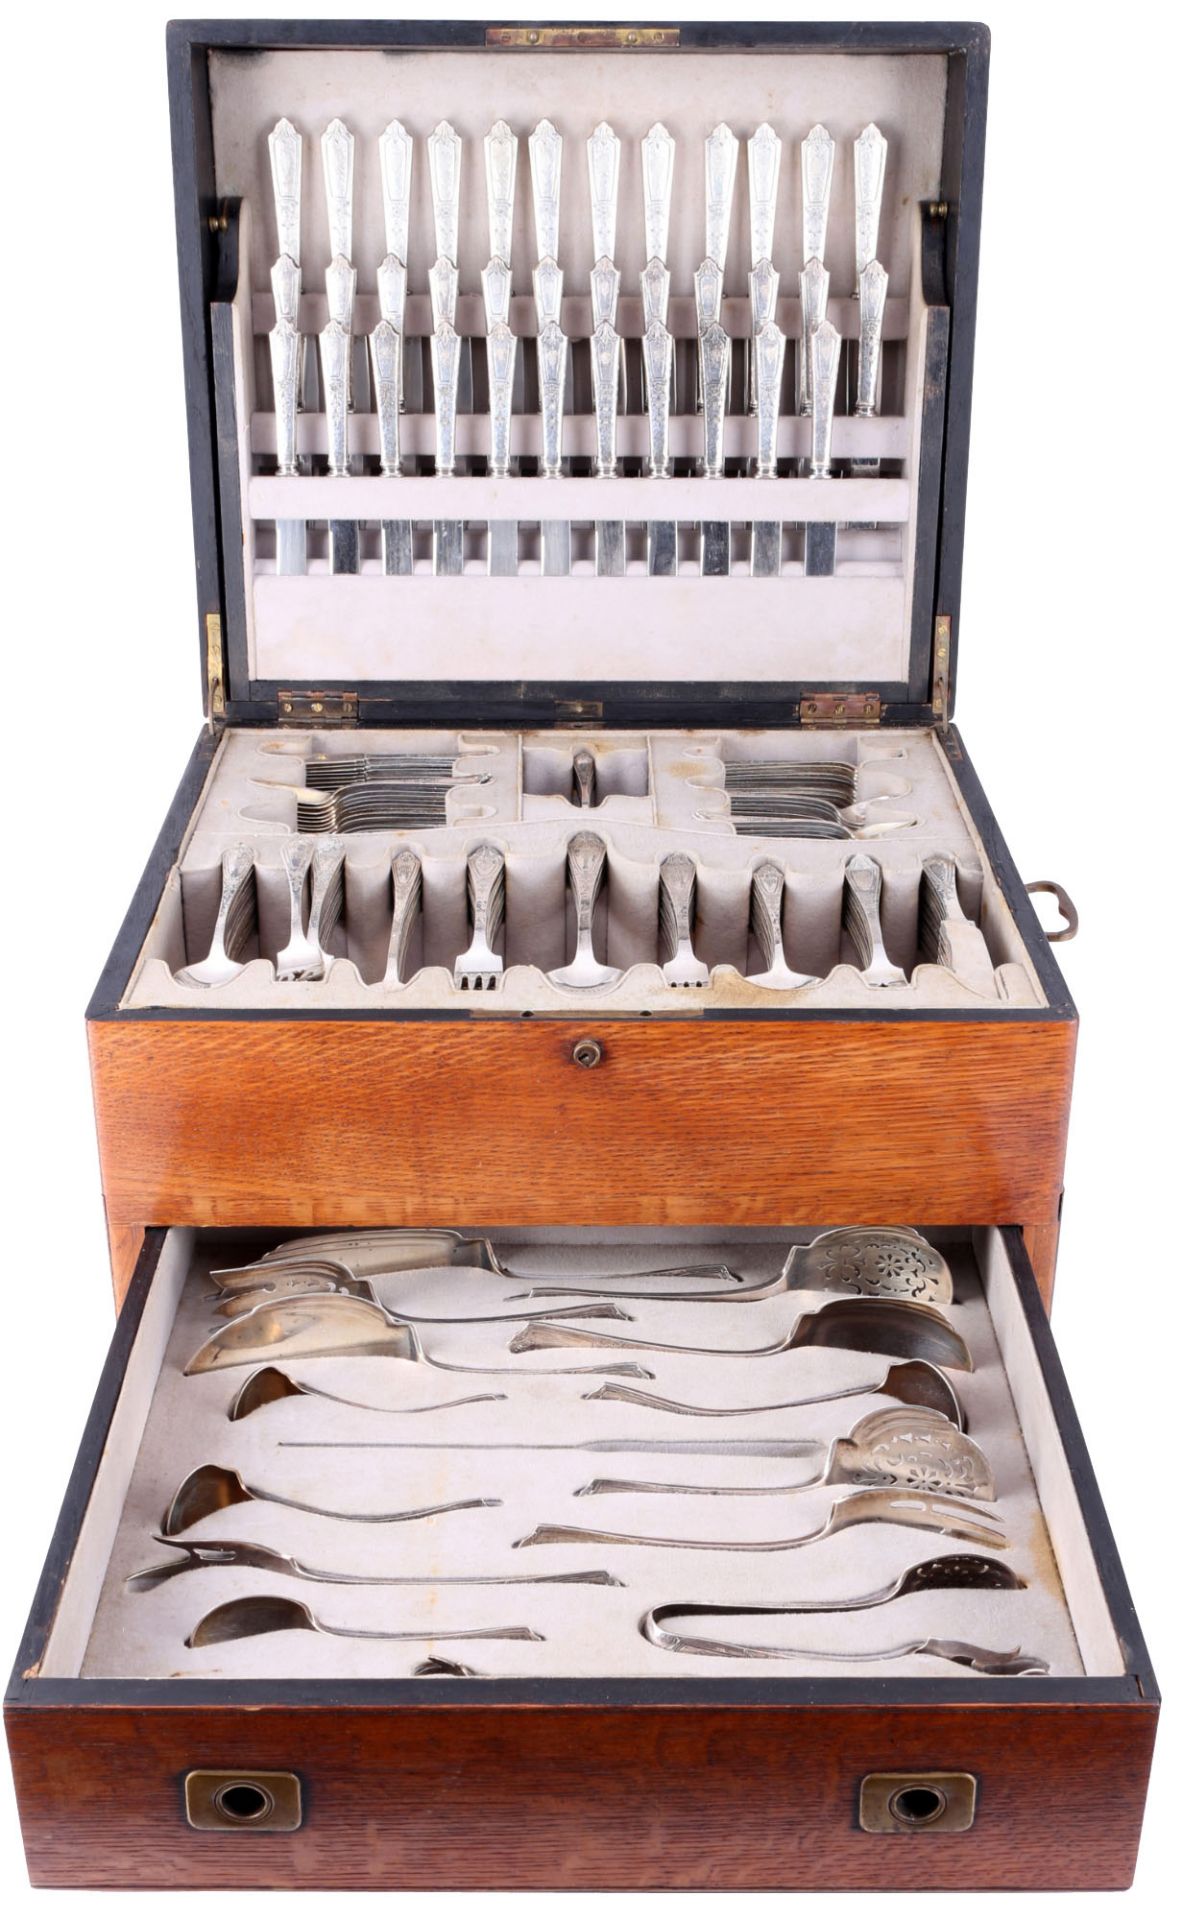 Gorham 925 Silber umfangreiches Besteck 1920/1930, extensive sterling silver cutlery set,